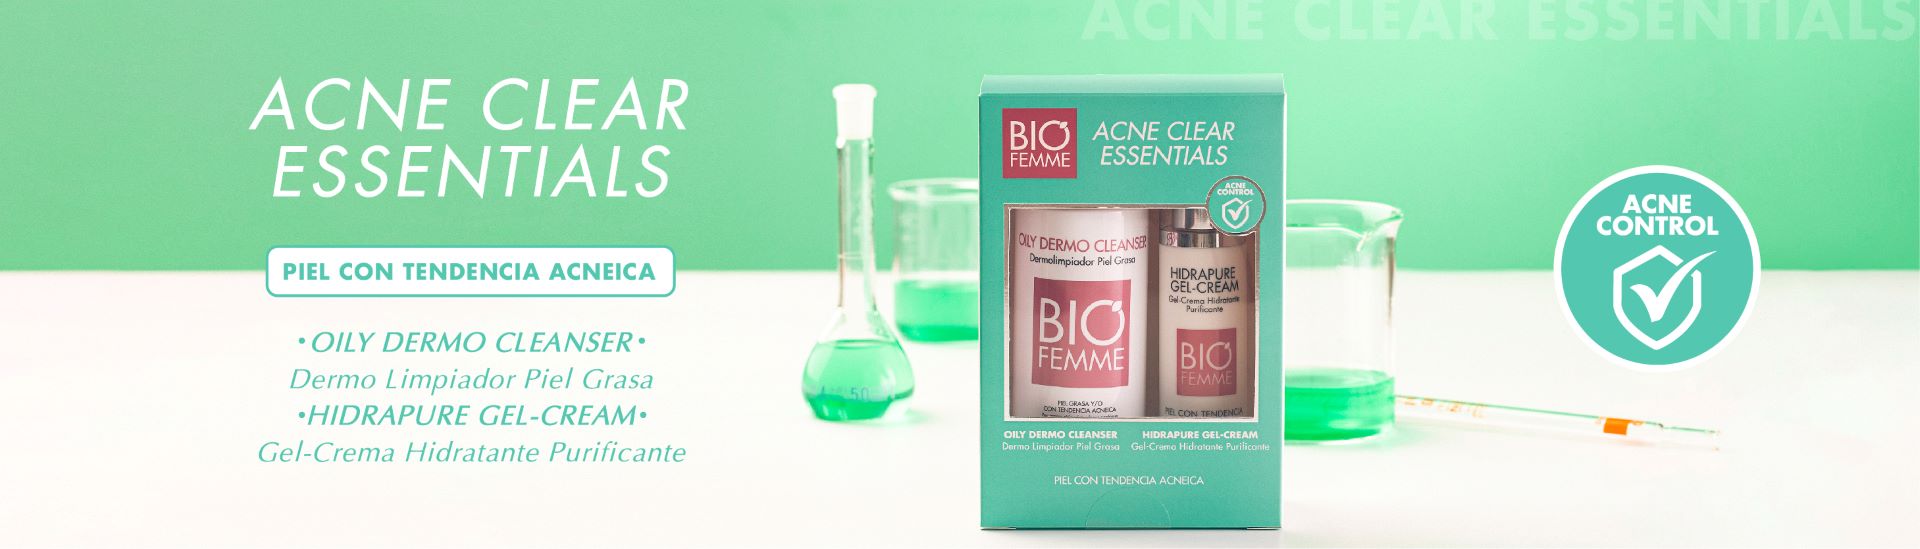 Acne Clear Essentials para Piel con tendencia acneica